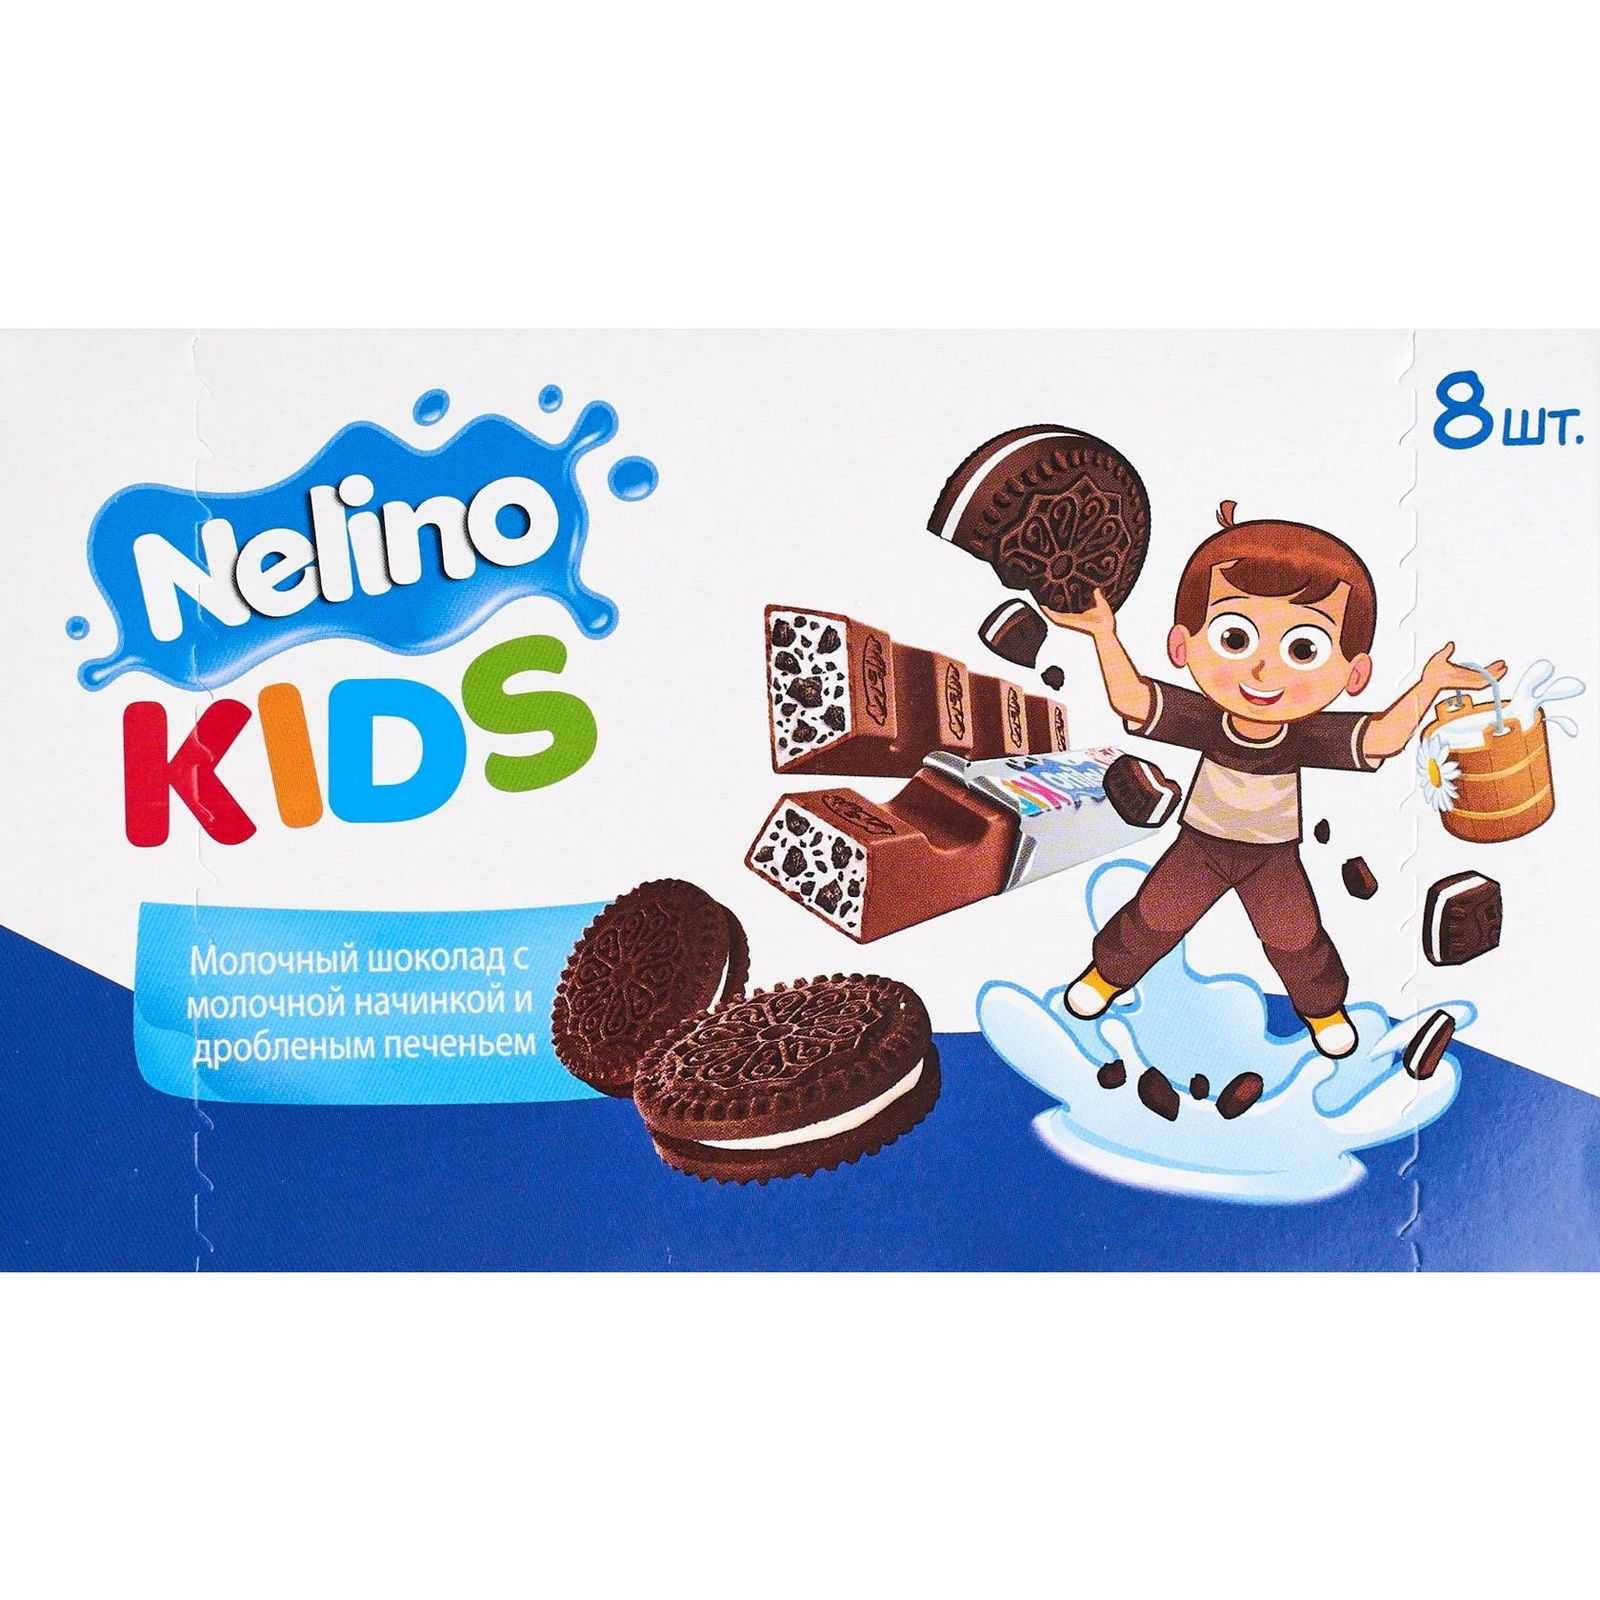 Крошки п. Nelino Kids молочный шоколад. Нелино Kids 93г 1х20 с крошкой печенья (п-180). Нелино Kids 100г 1х20 клубника. Nelino Kids шоколад 100г.